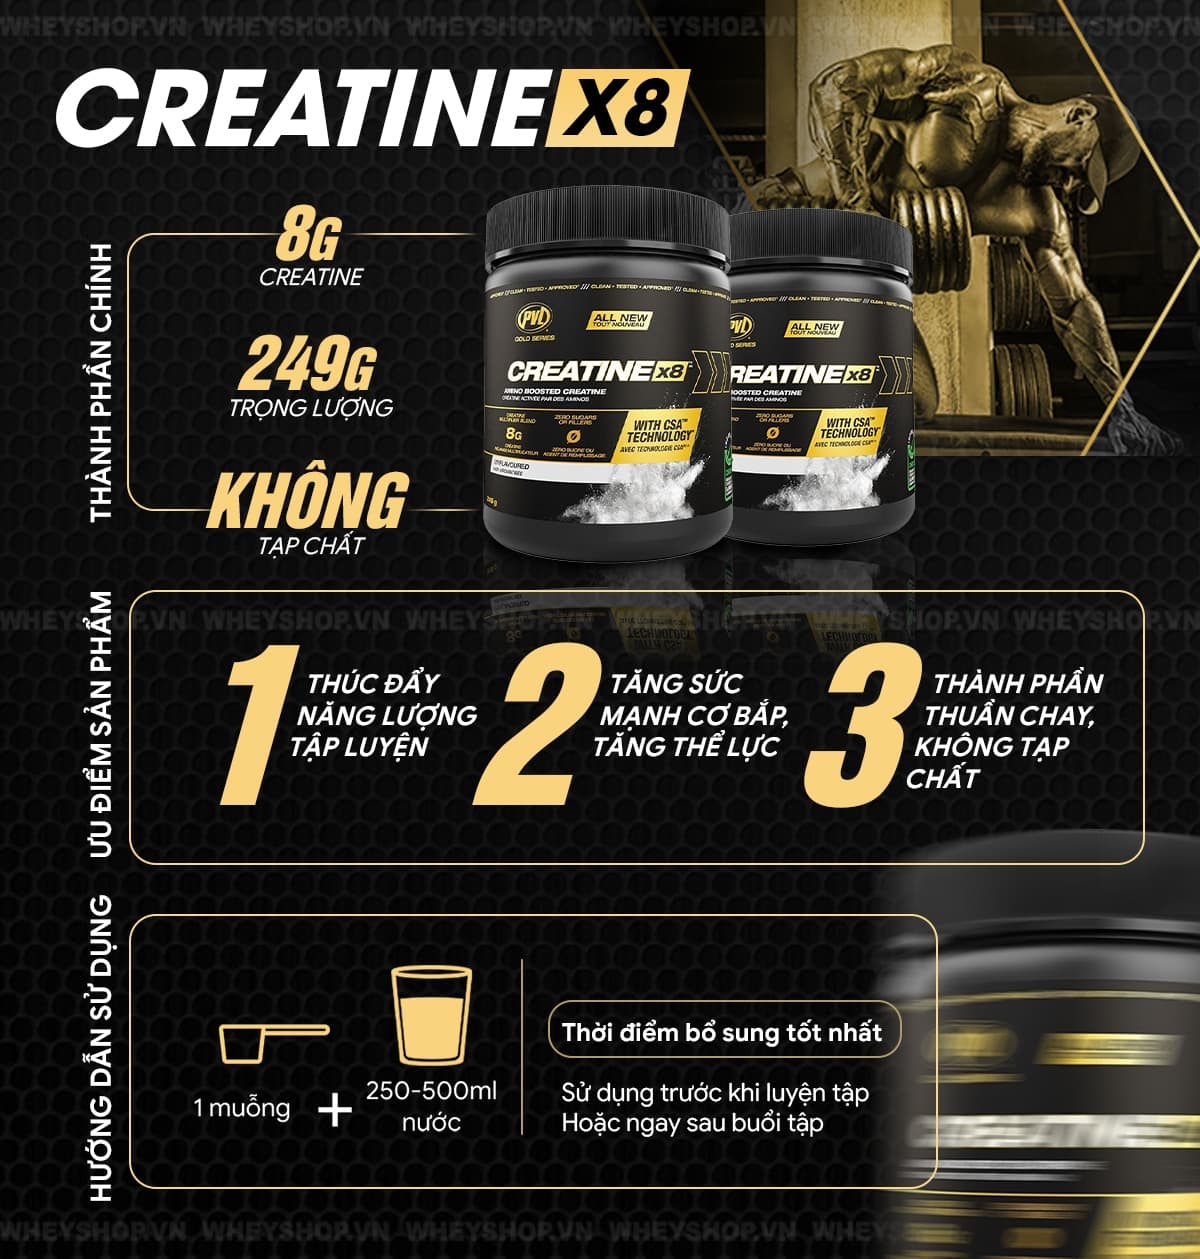 review-danh-gia-pvl-creatine-x8-co-tot-khong-3